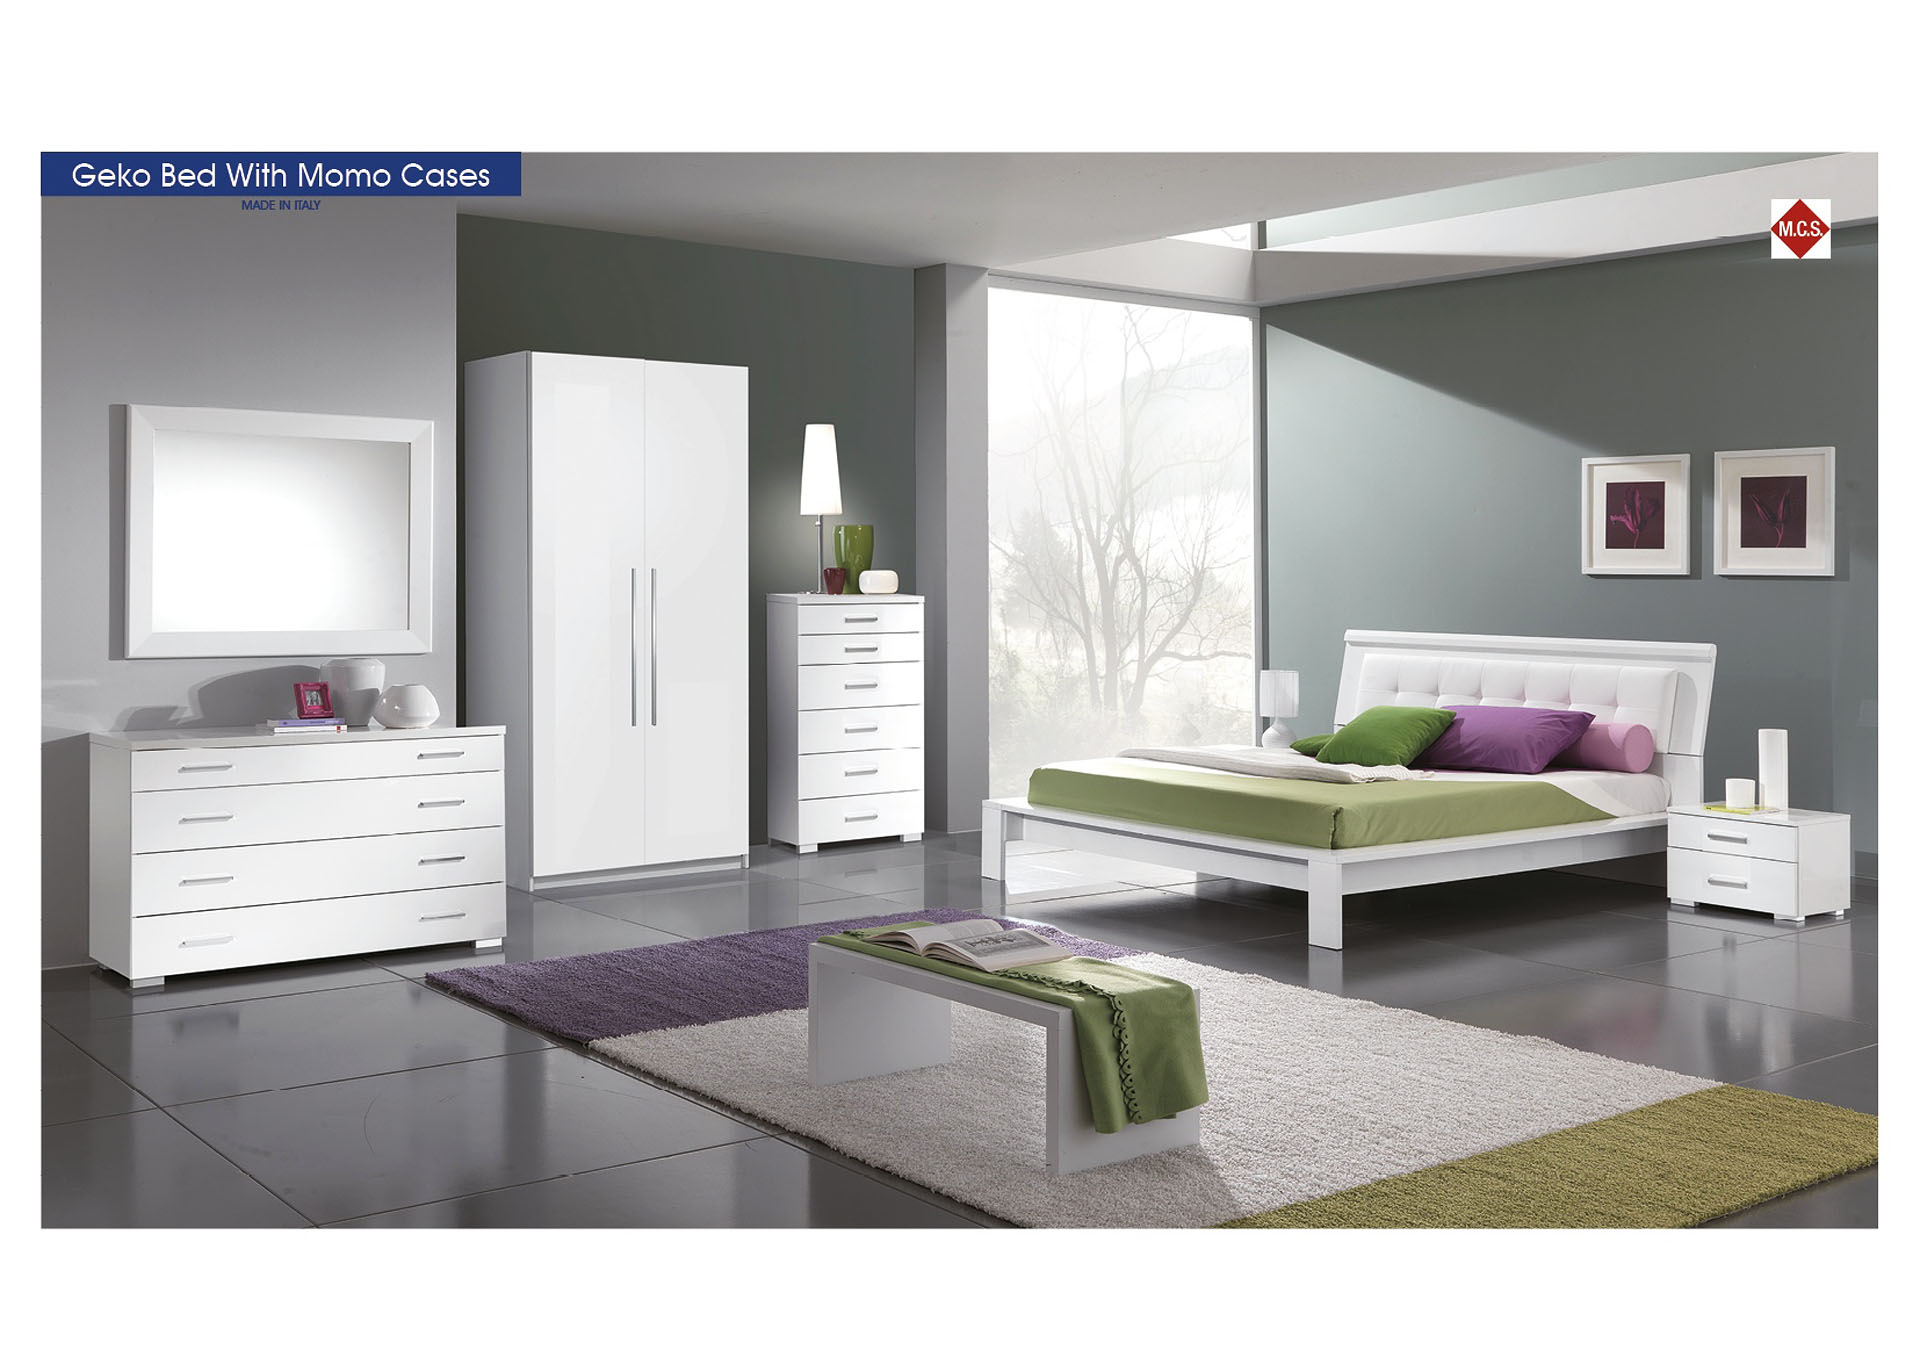 Geko White Full Bed,ESF Wholesale Furniture